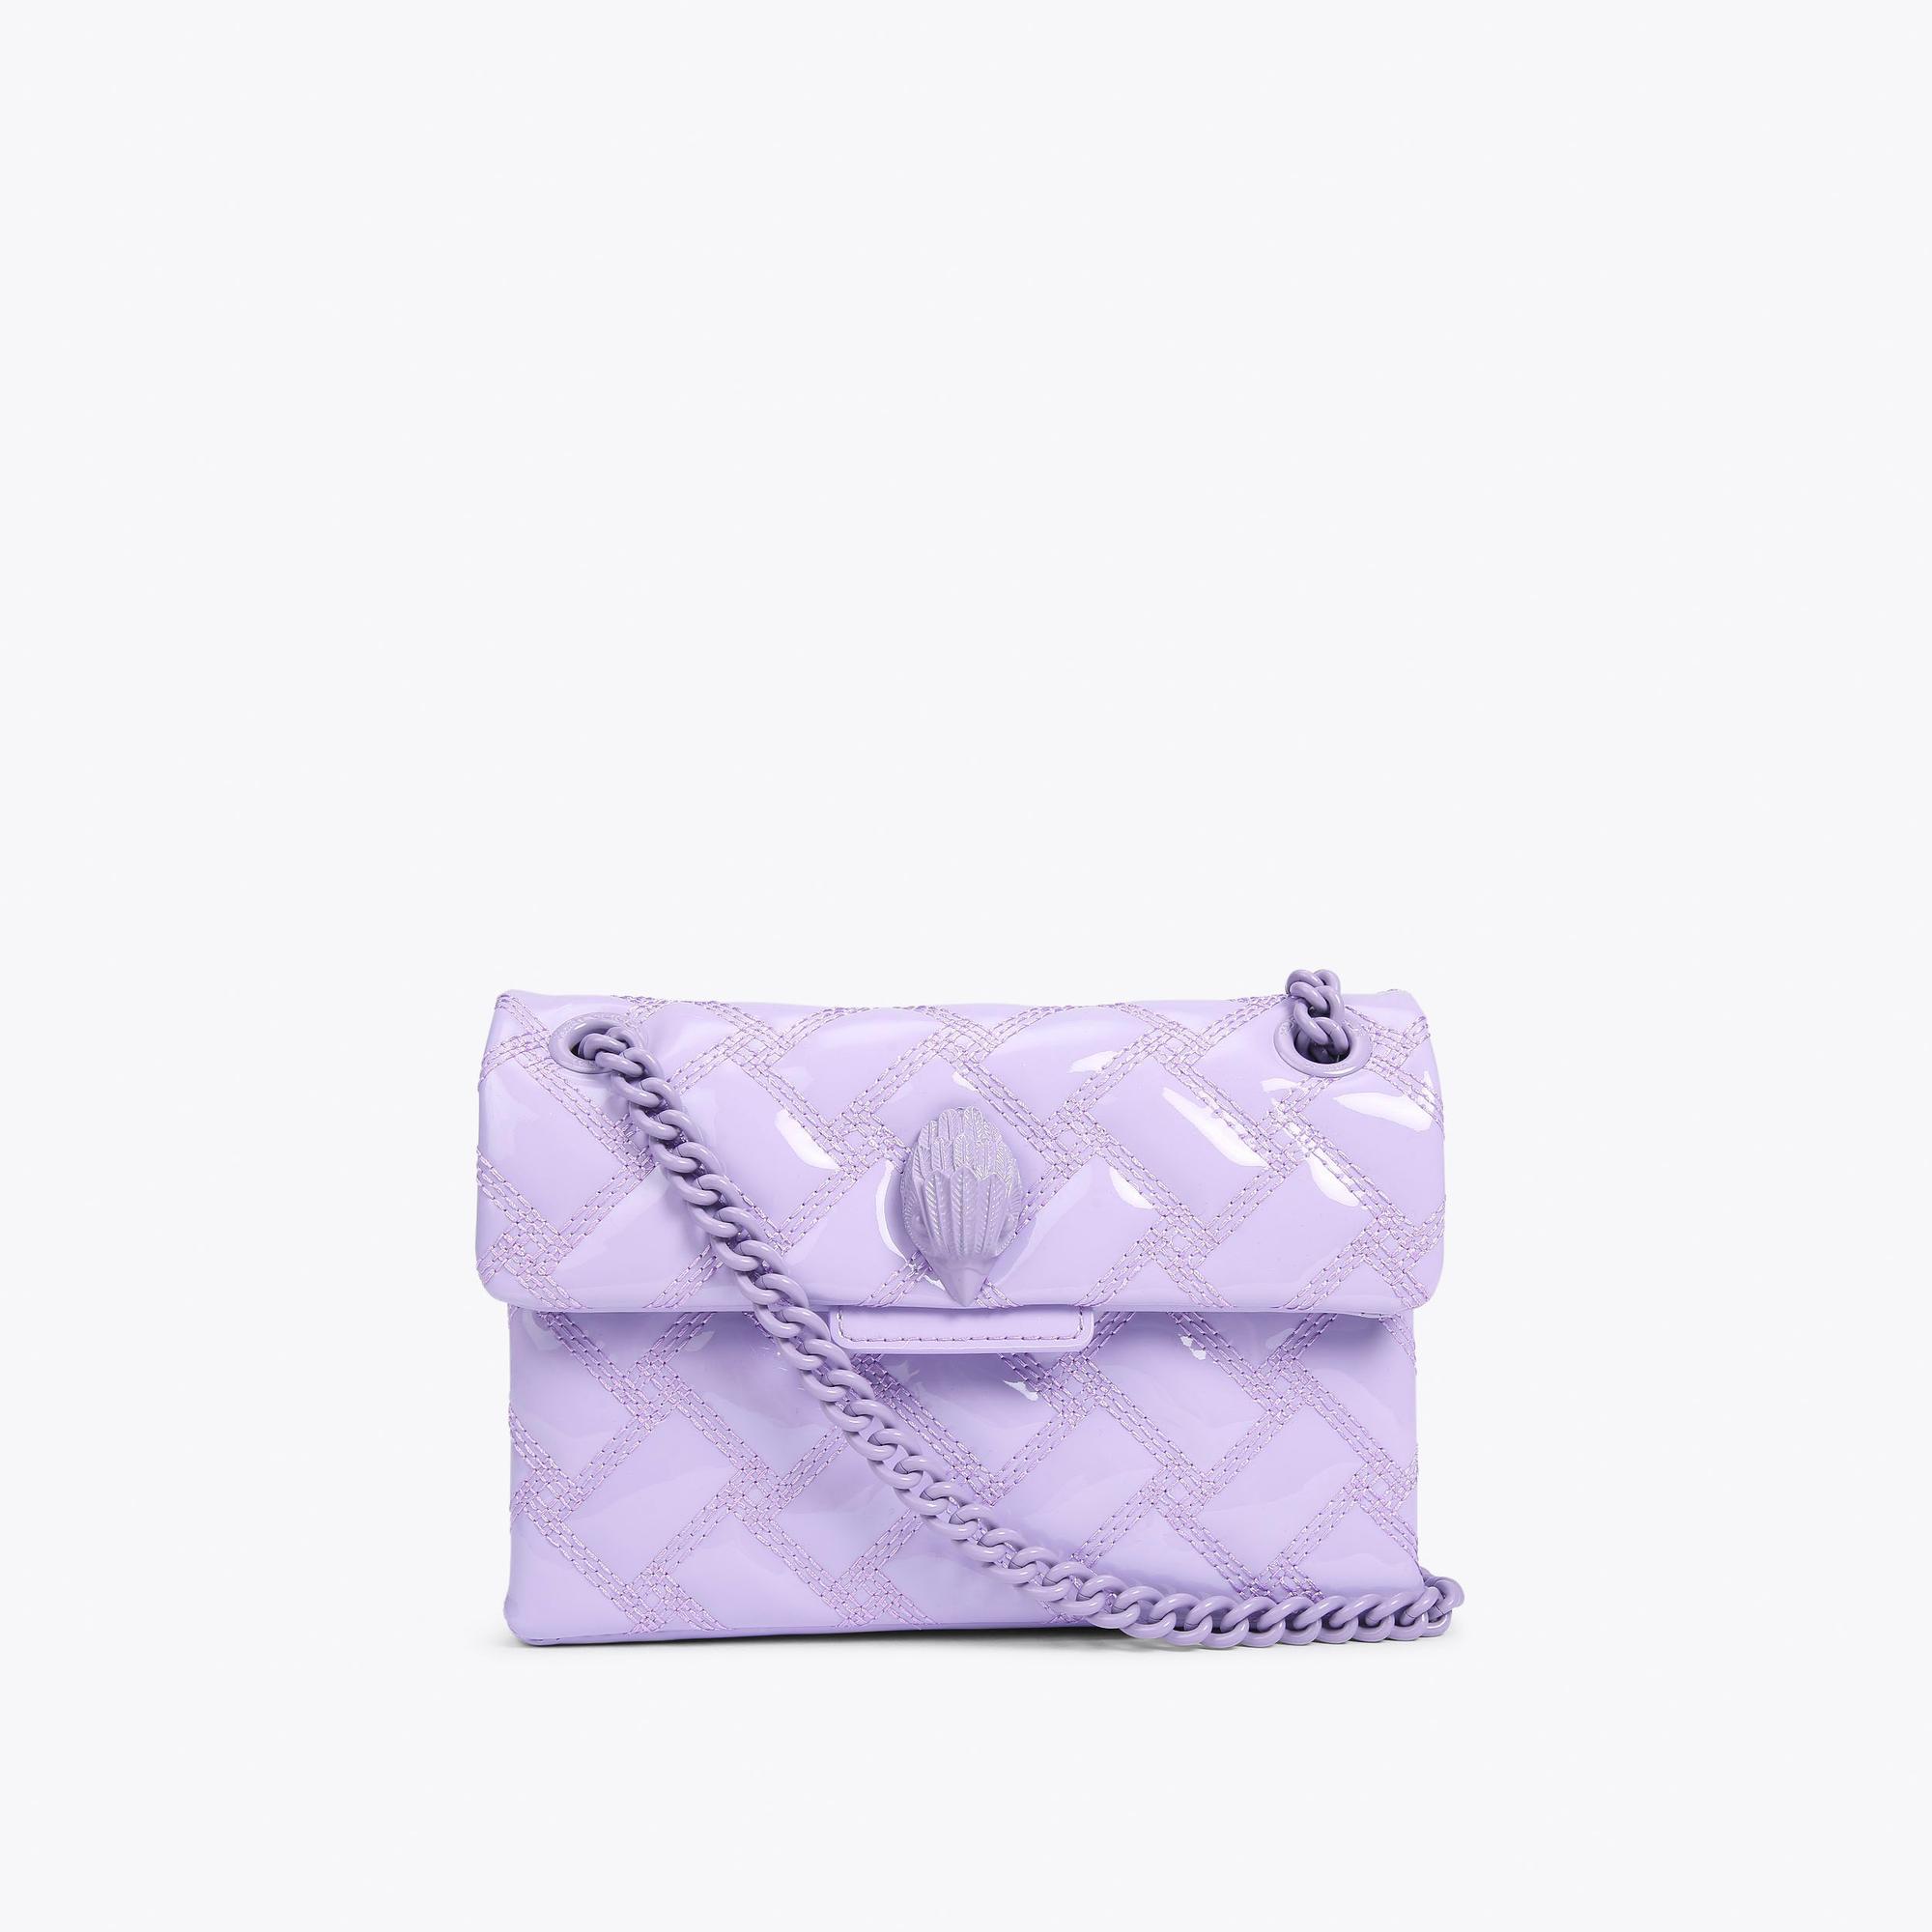 Kurt Geiger - Authenticated Handbag - Synthetic Purple for Women, Never Worn